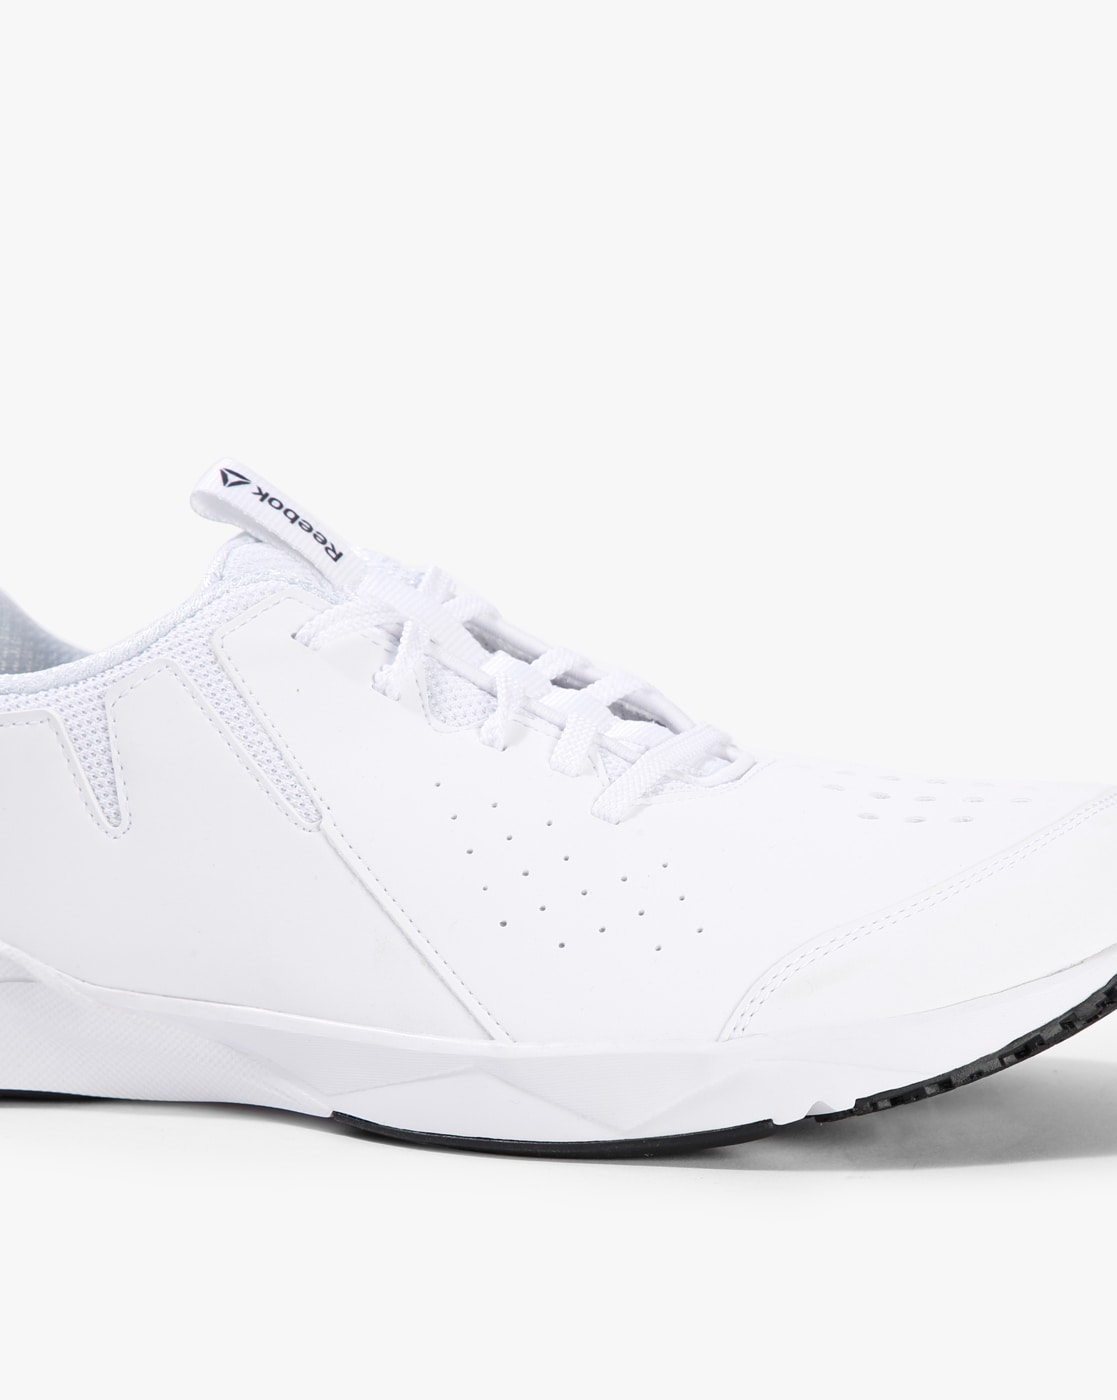 huella dactilar terminar Admisión Buy White Sports Shoes for Men by Reebok Online | Ajio.com